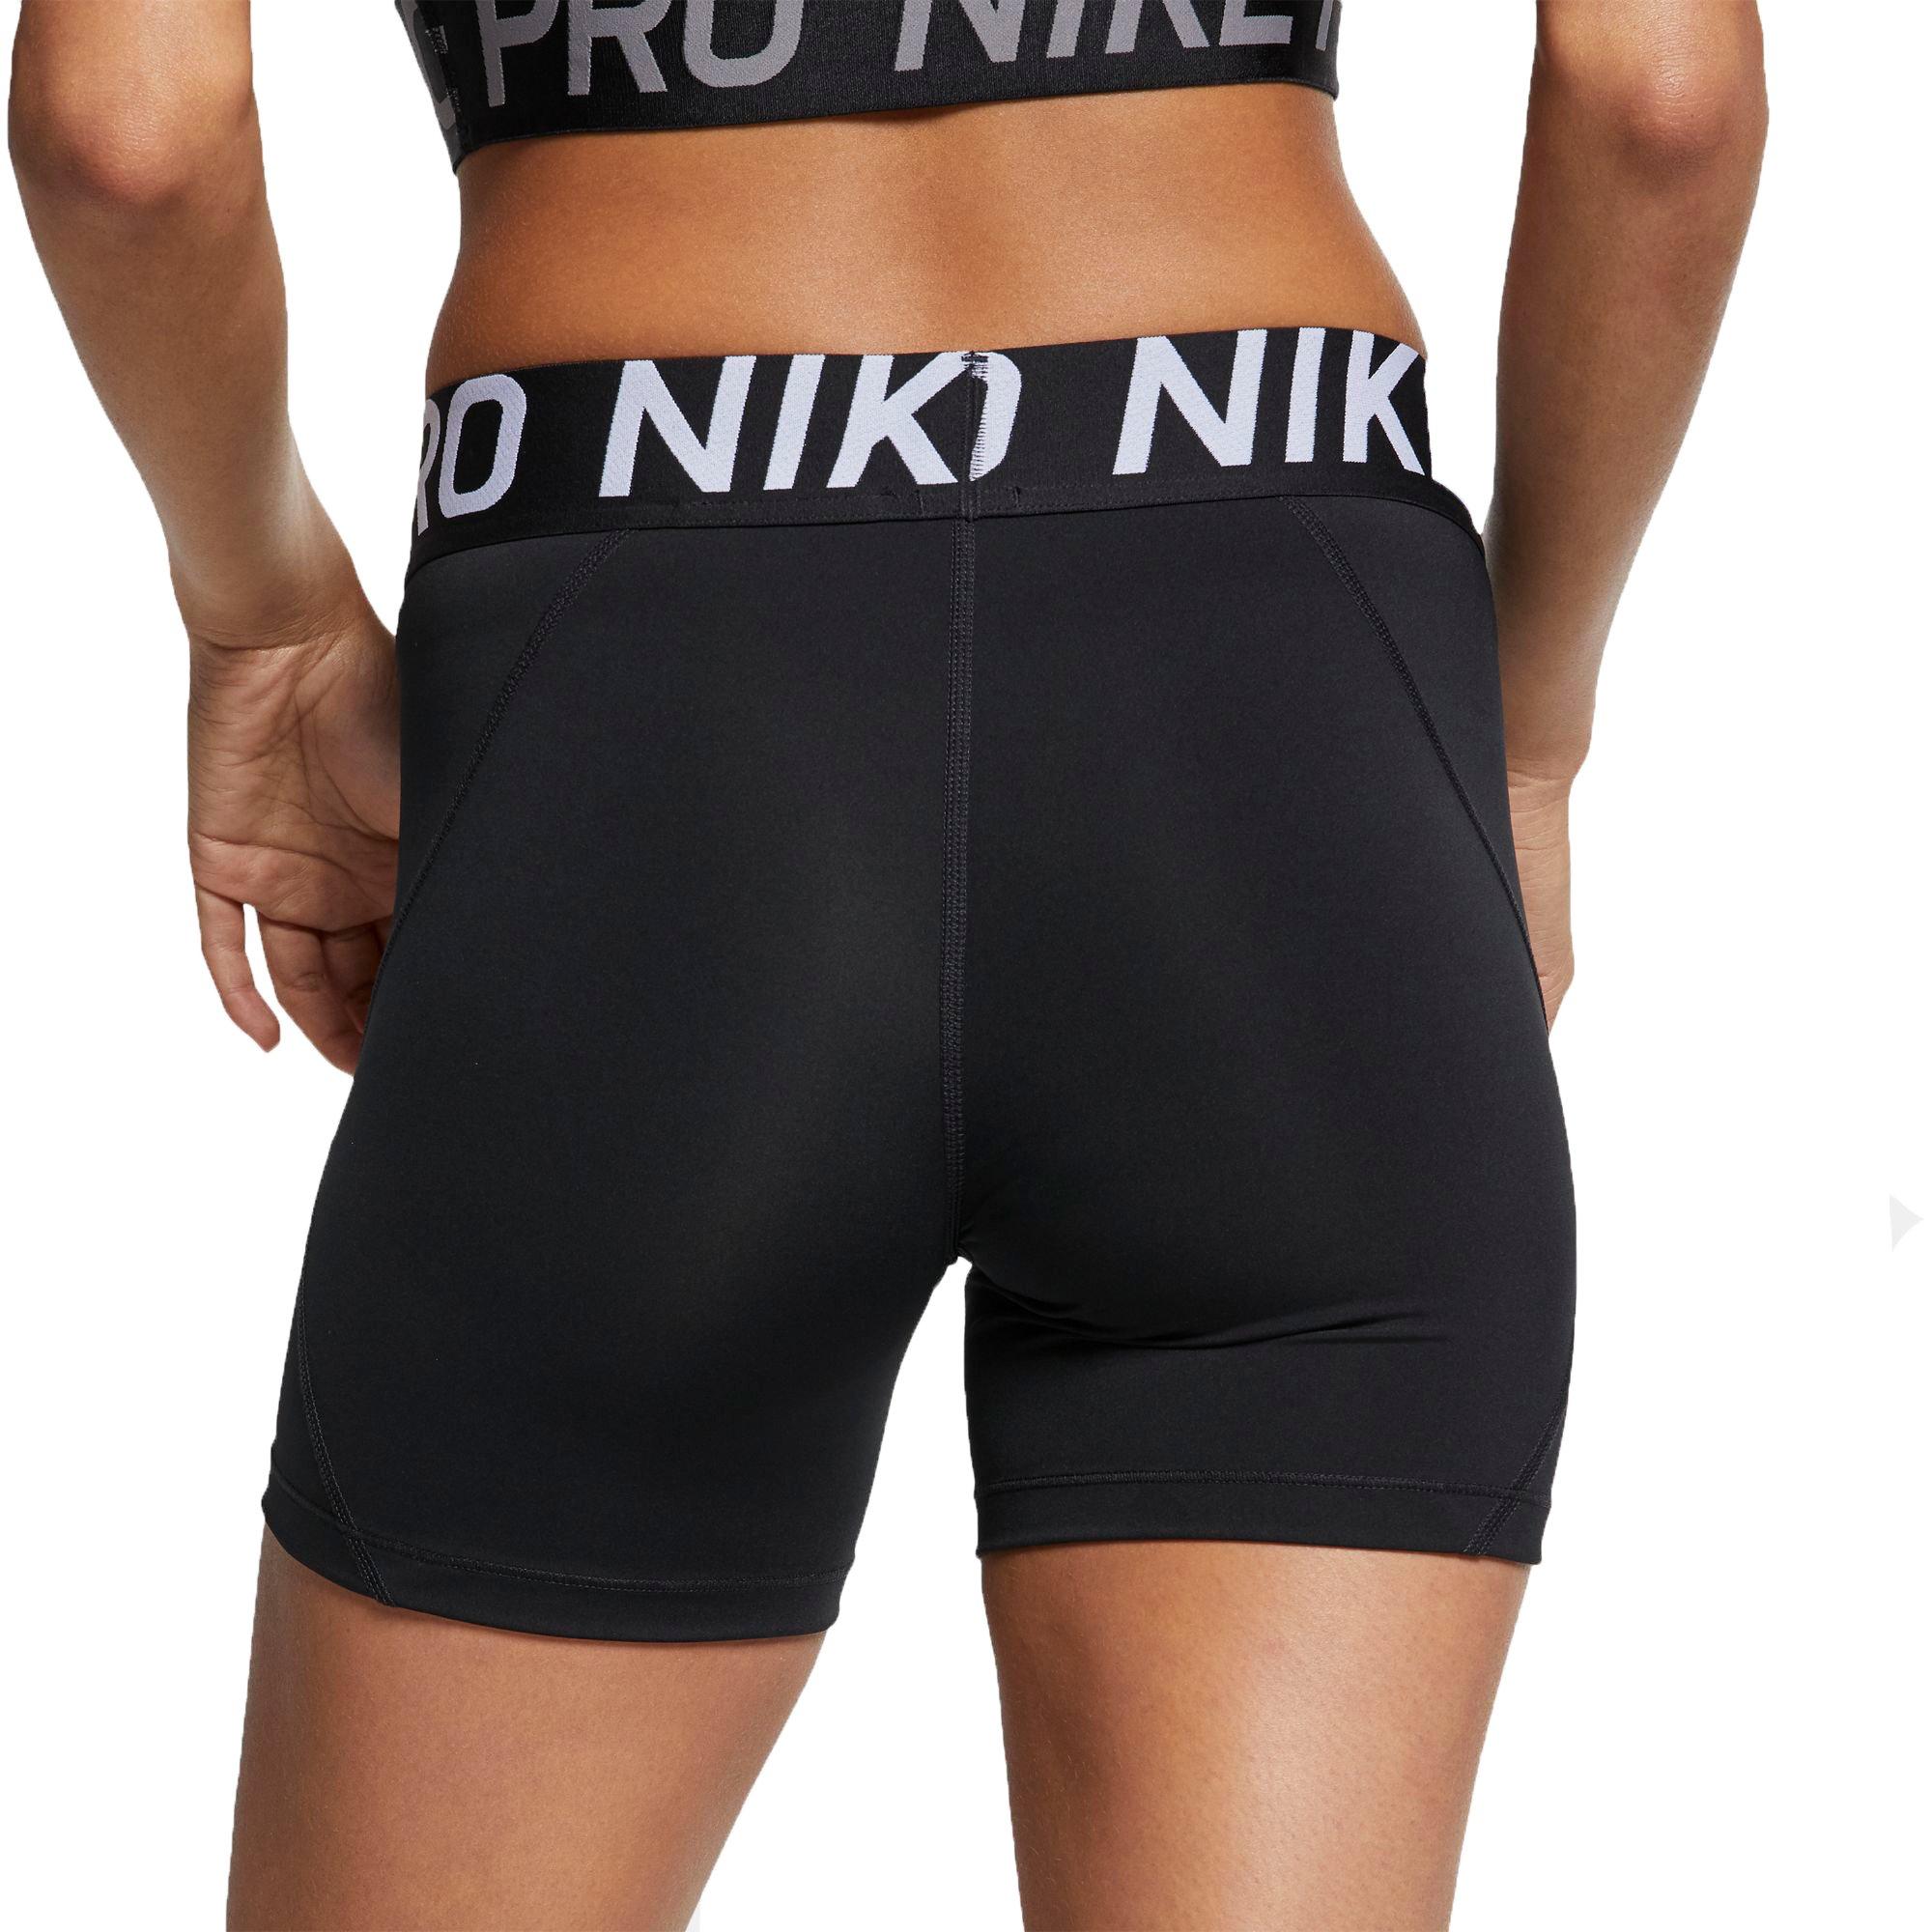 nike pro shorts 5 inch womens